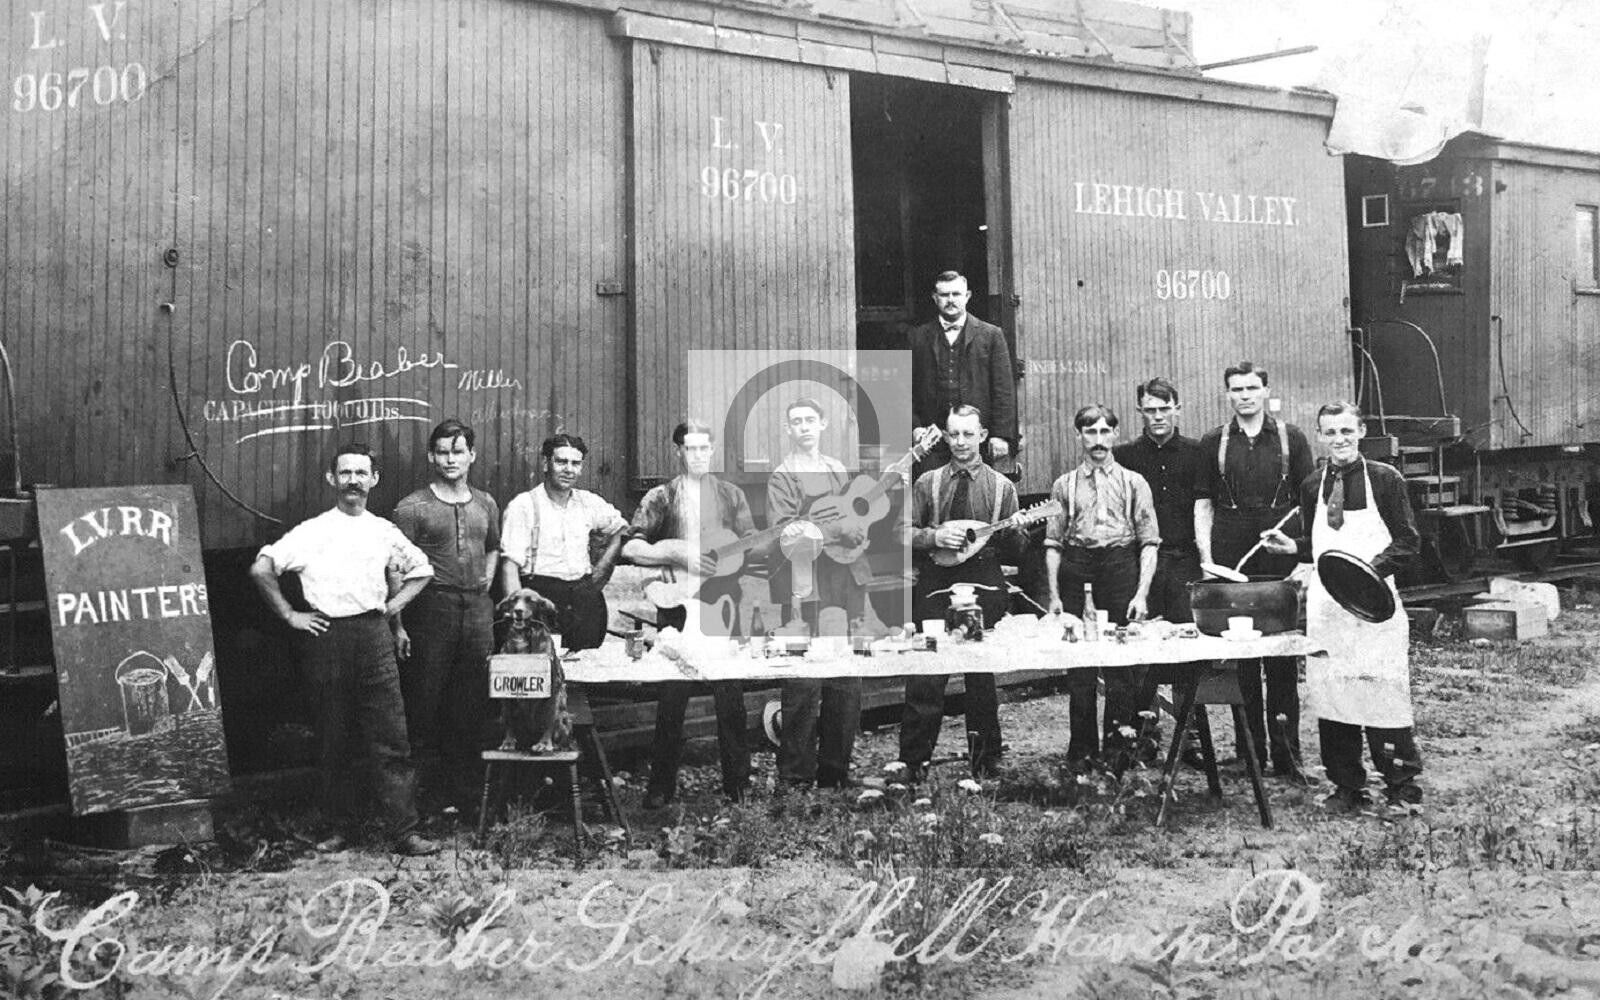 Leigh Valley Railroad Camp Beaber Schuylkill Haven Pennsylvania Reprint Postcard